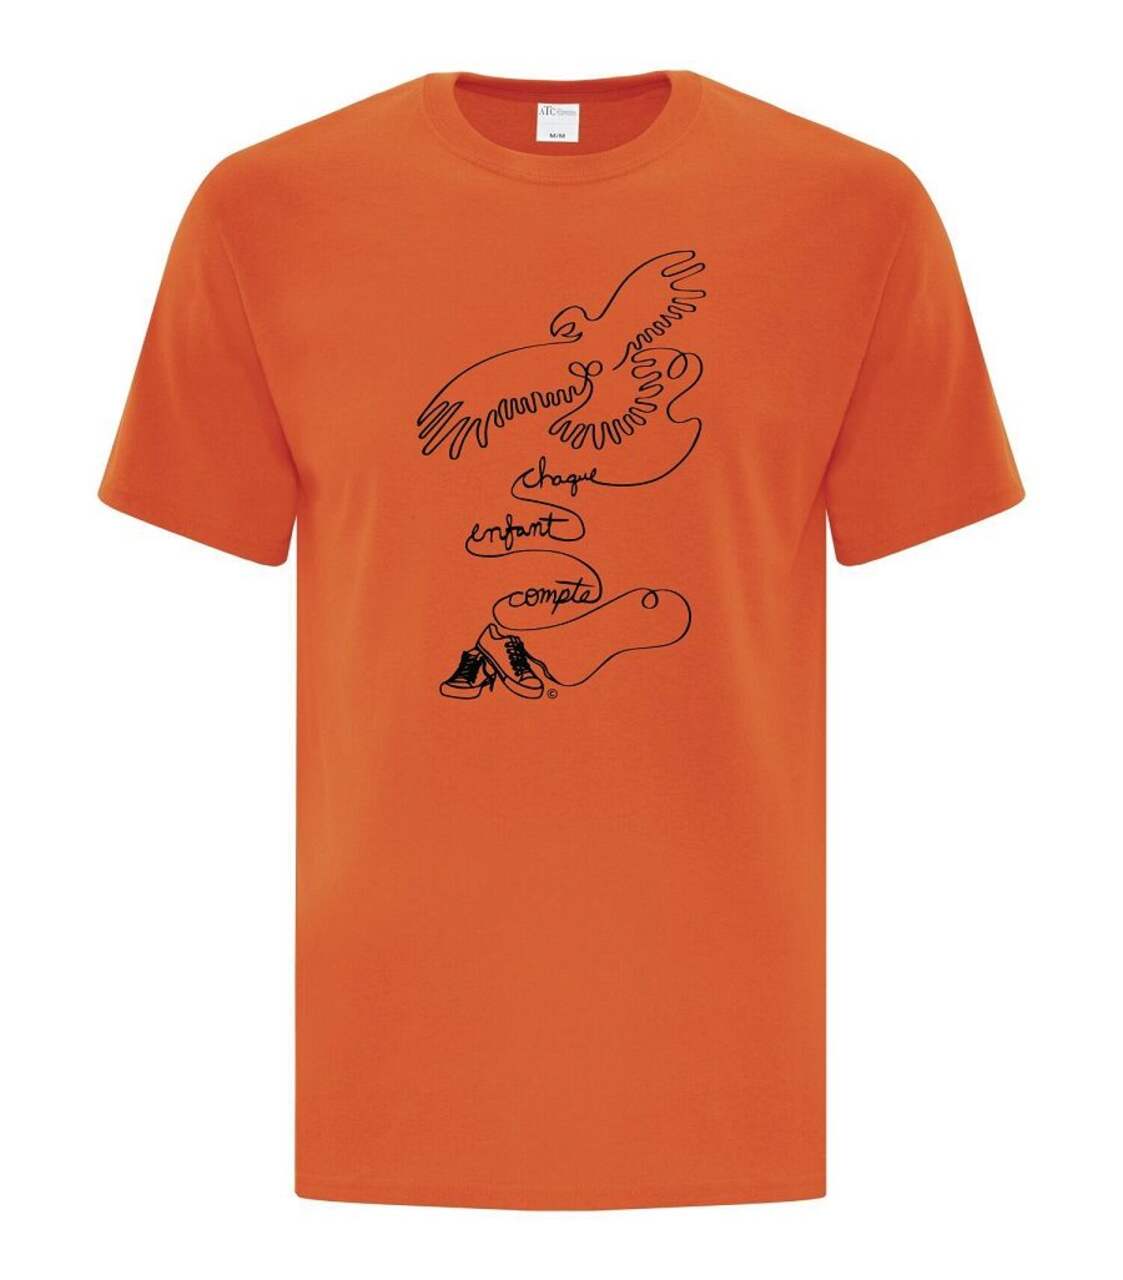 Orange Shirt Society: Every Child Matters T-Shirt, French, Medium